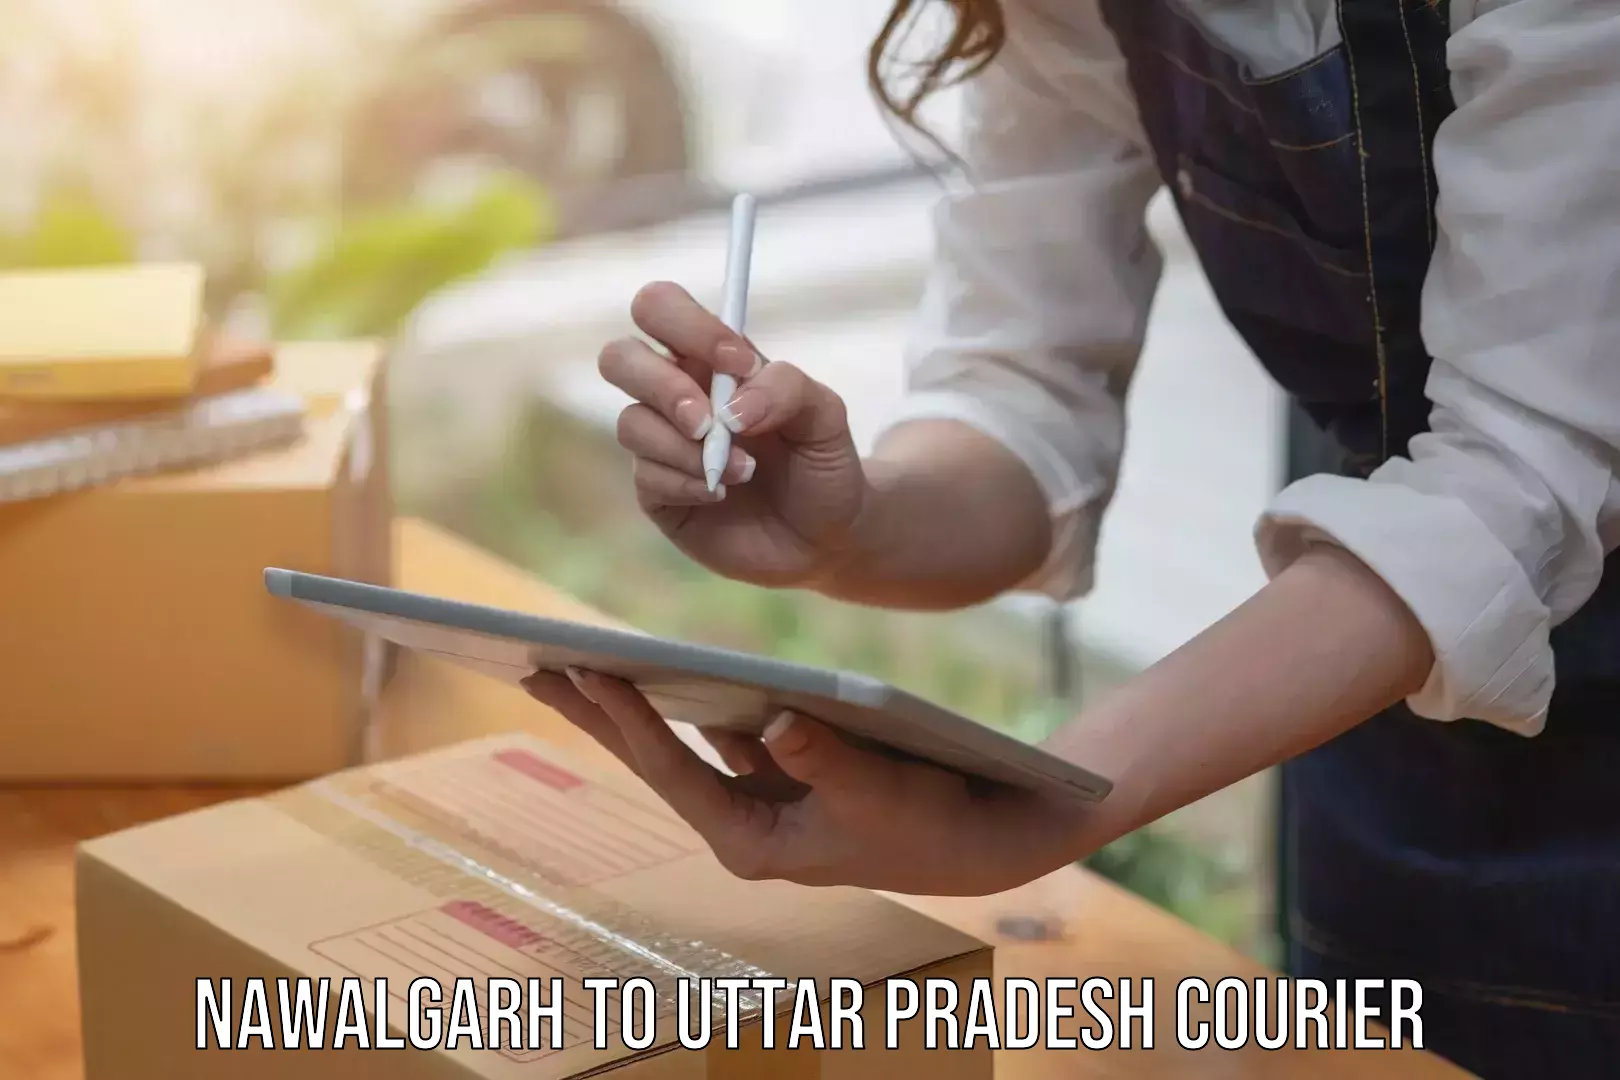 State-of-the-art courier technology Nawalgarh to Mughalsarai